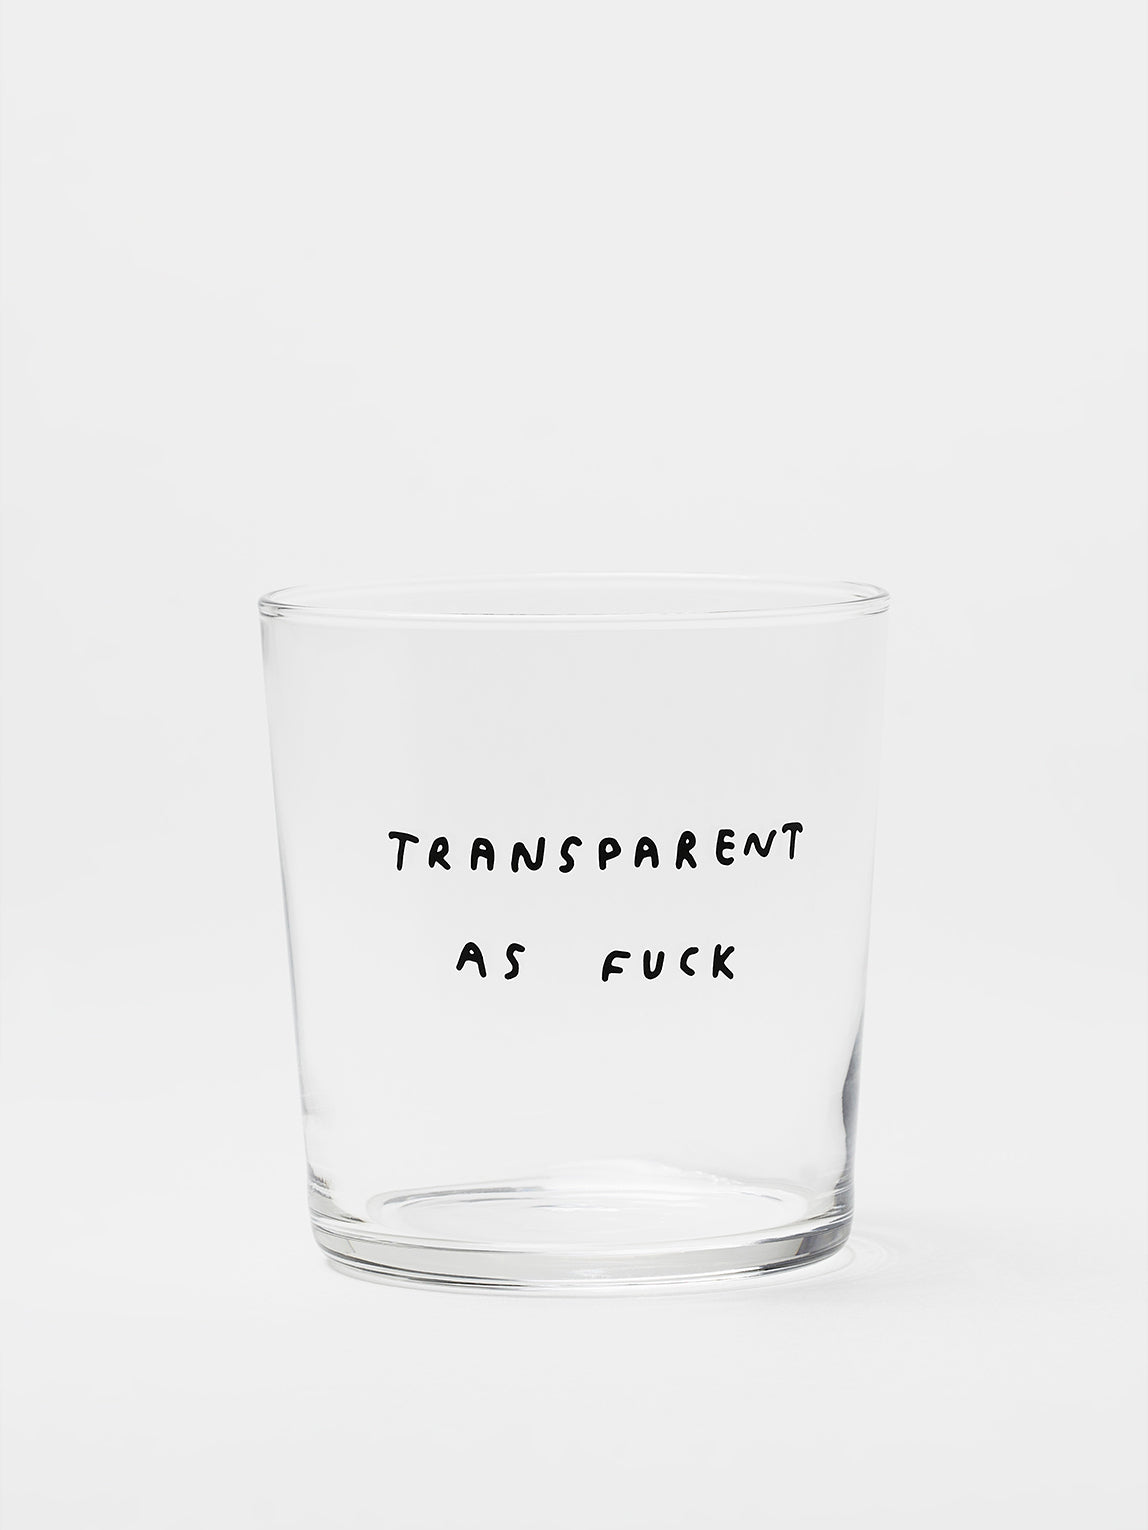 Transparent as fuck